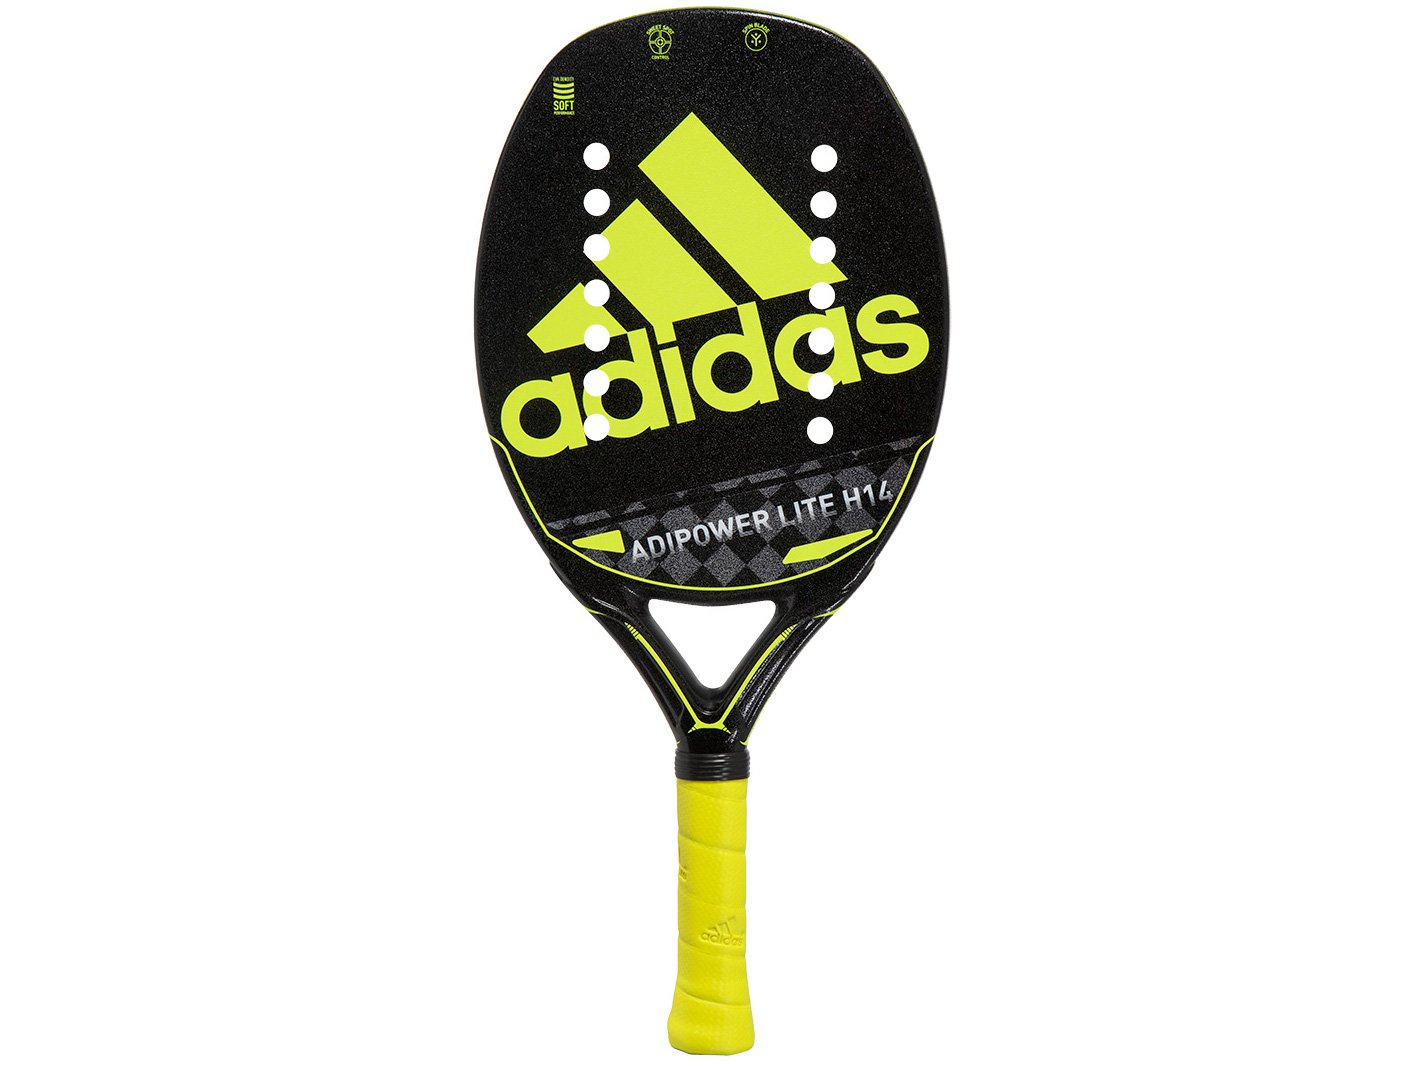 Raquete de Beach Tennis Adidas Adipower Lite H14 + Sacola Gym sack